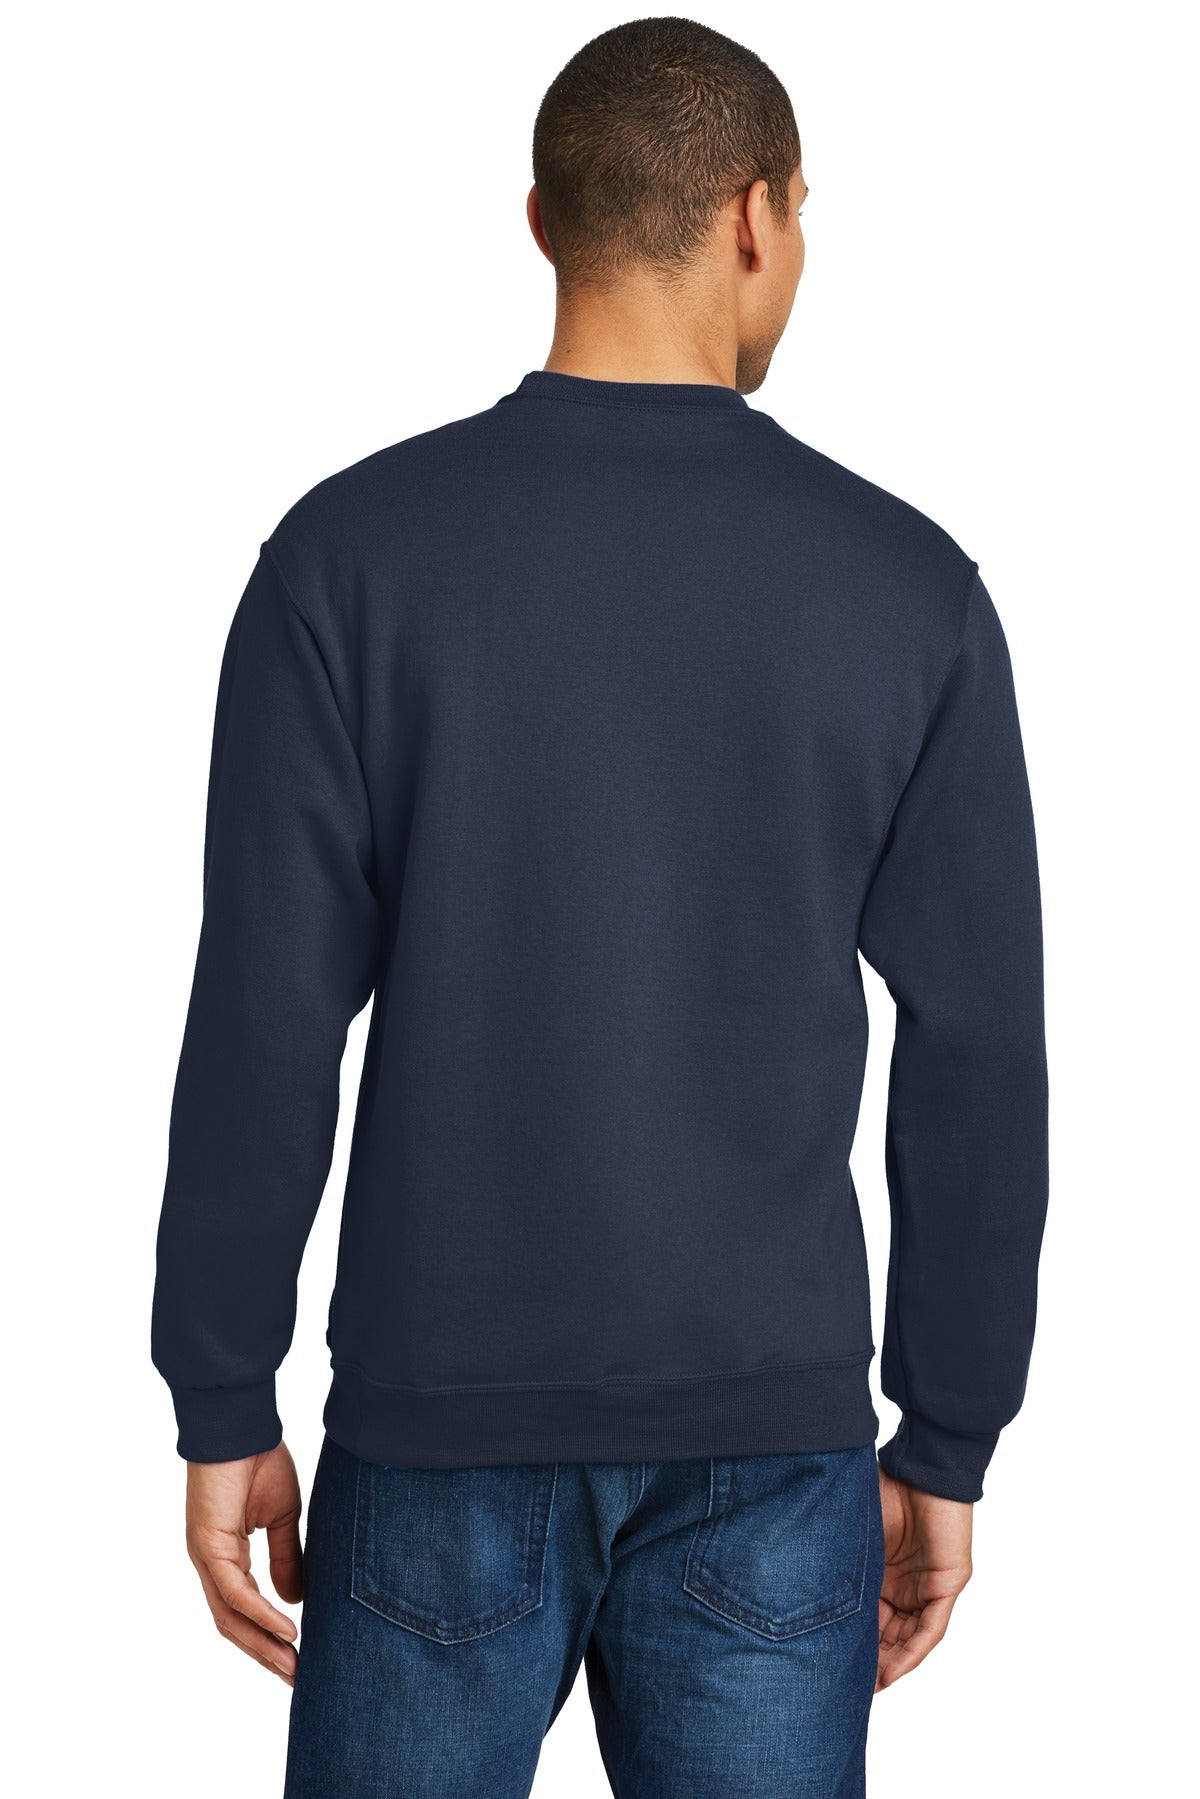 JERZEES® - NuBlend® Crewneck Sweatshirt. 562M [Navy] - DFW Impression